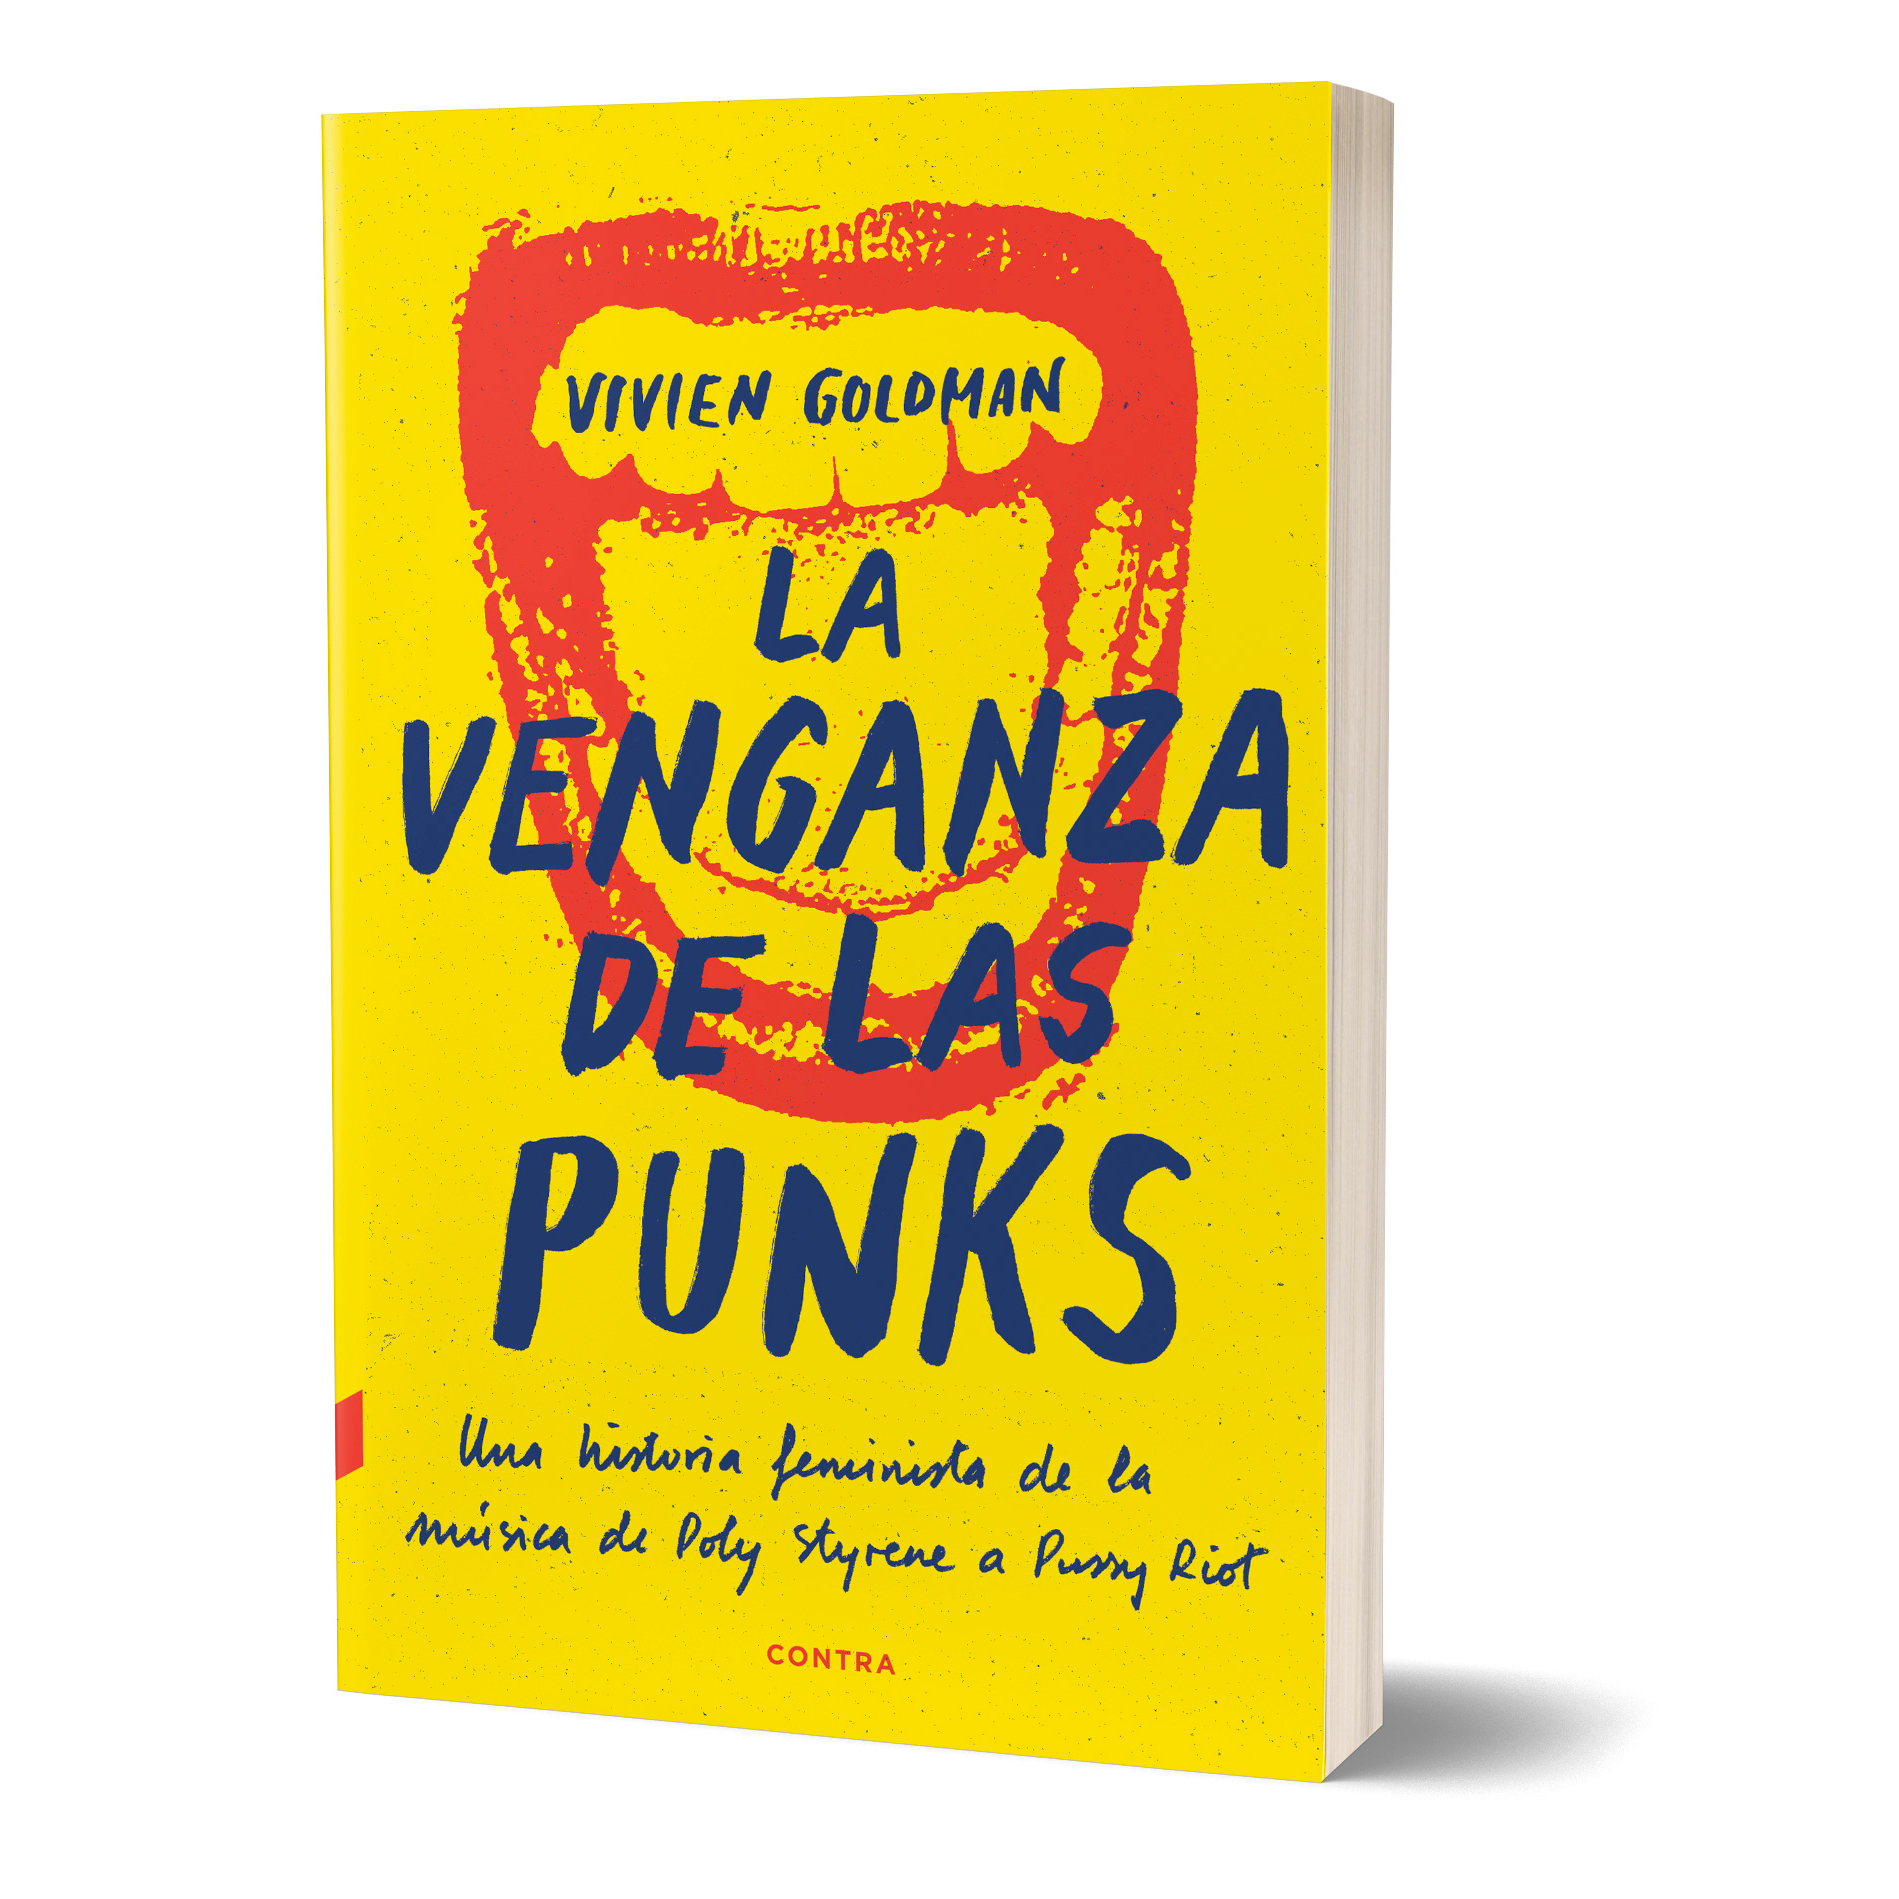 "La venganza de los punks" de Vivien Goldman